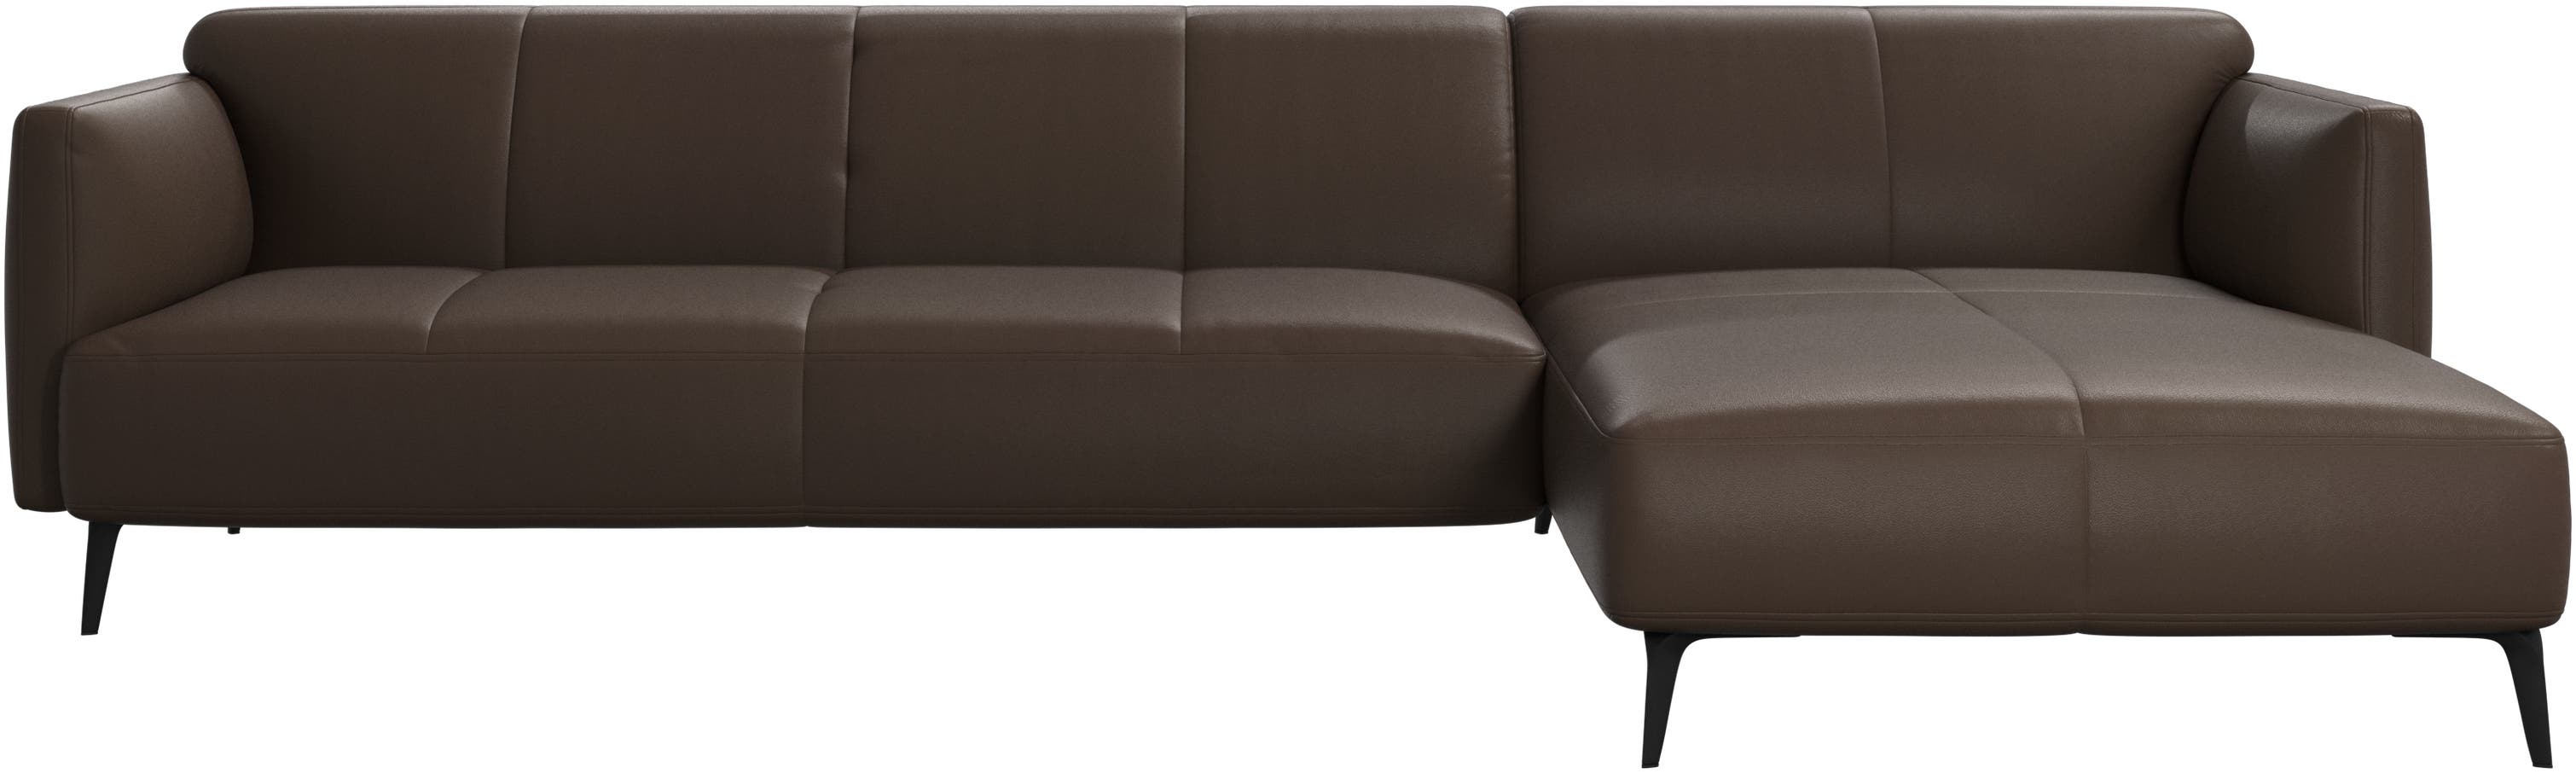 Modena sofa with resting unit